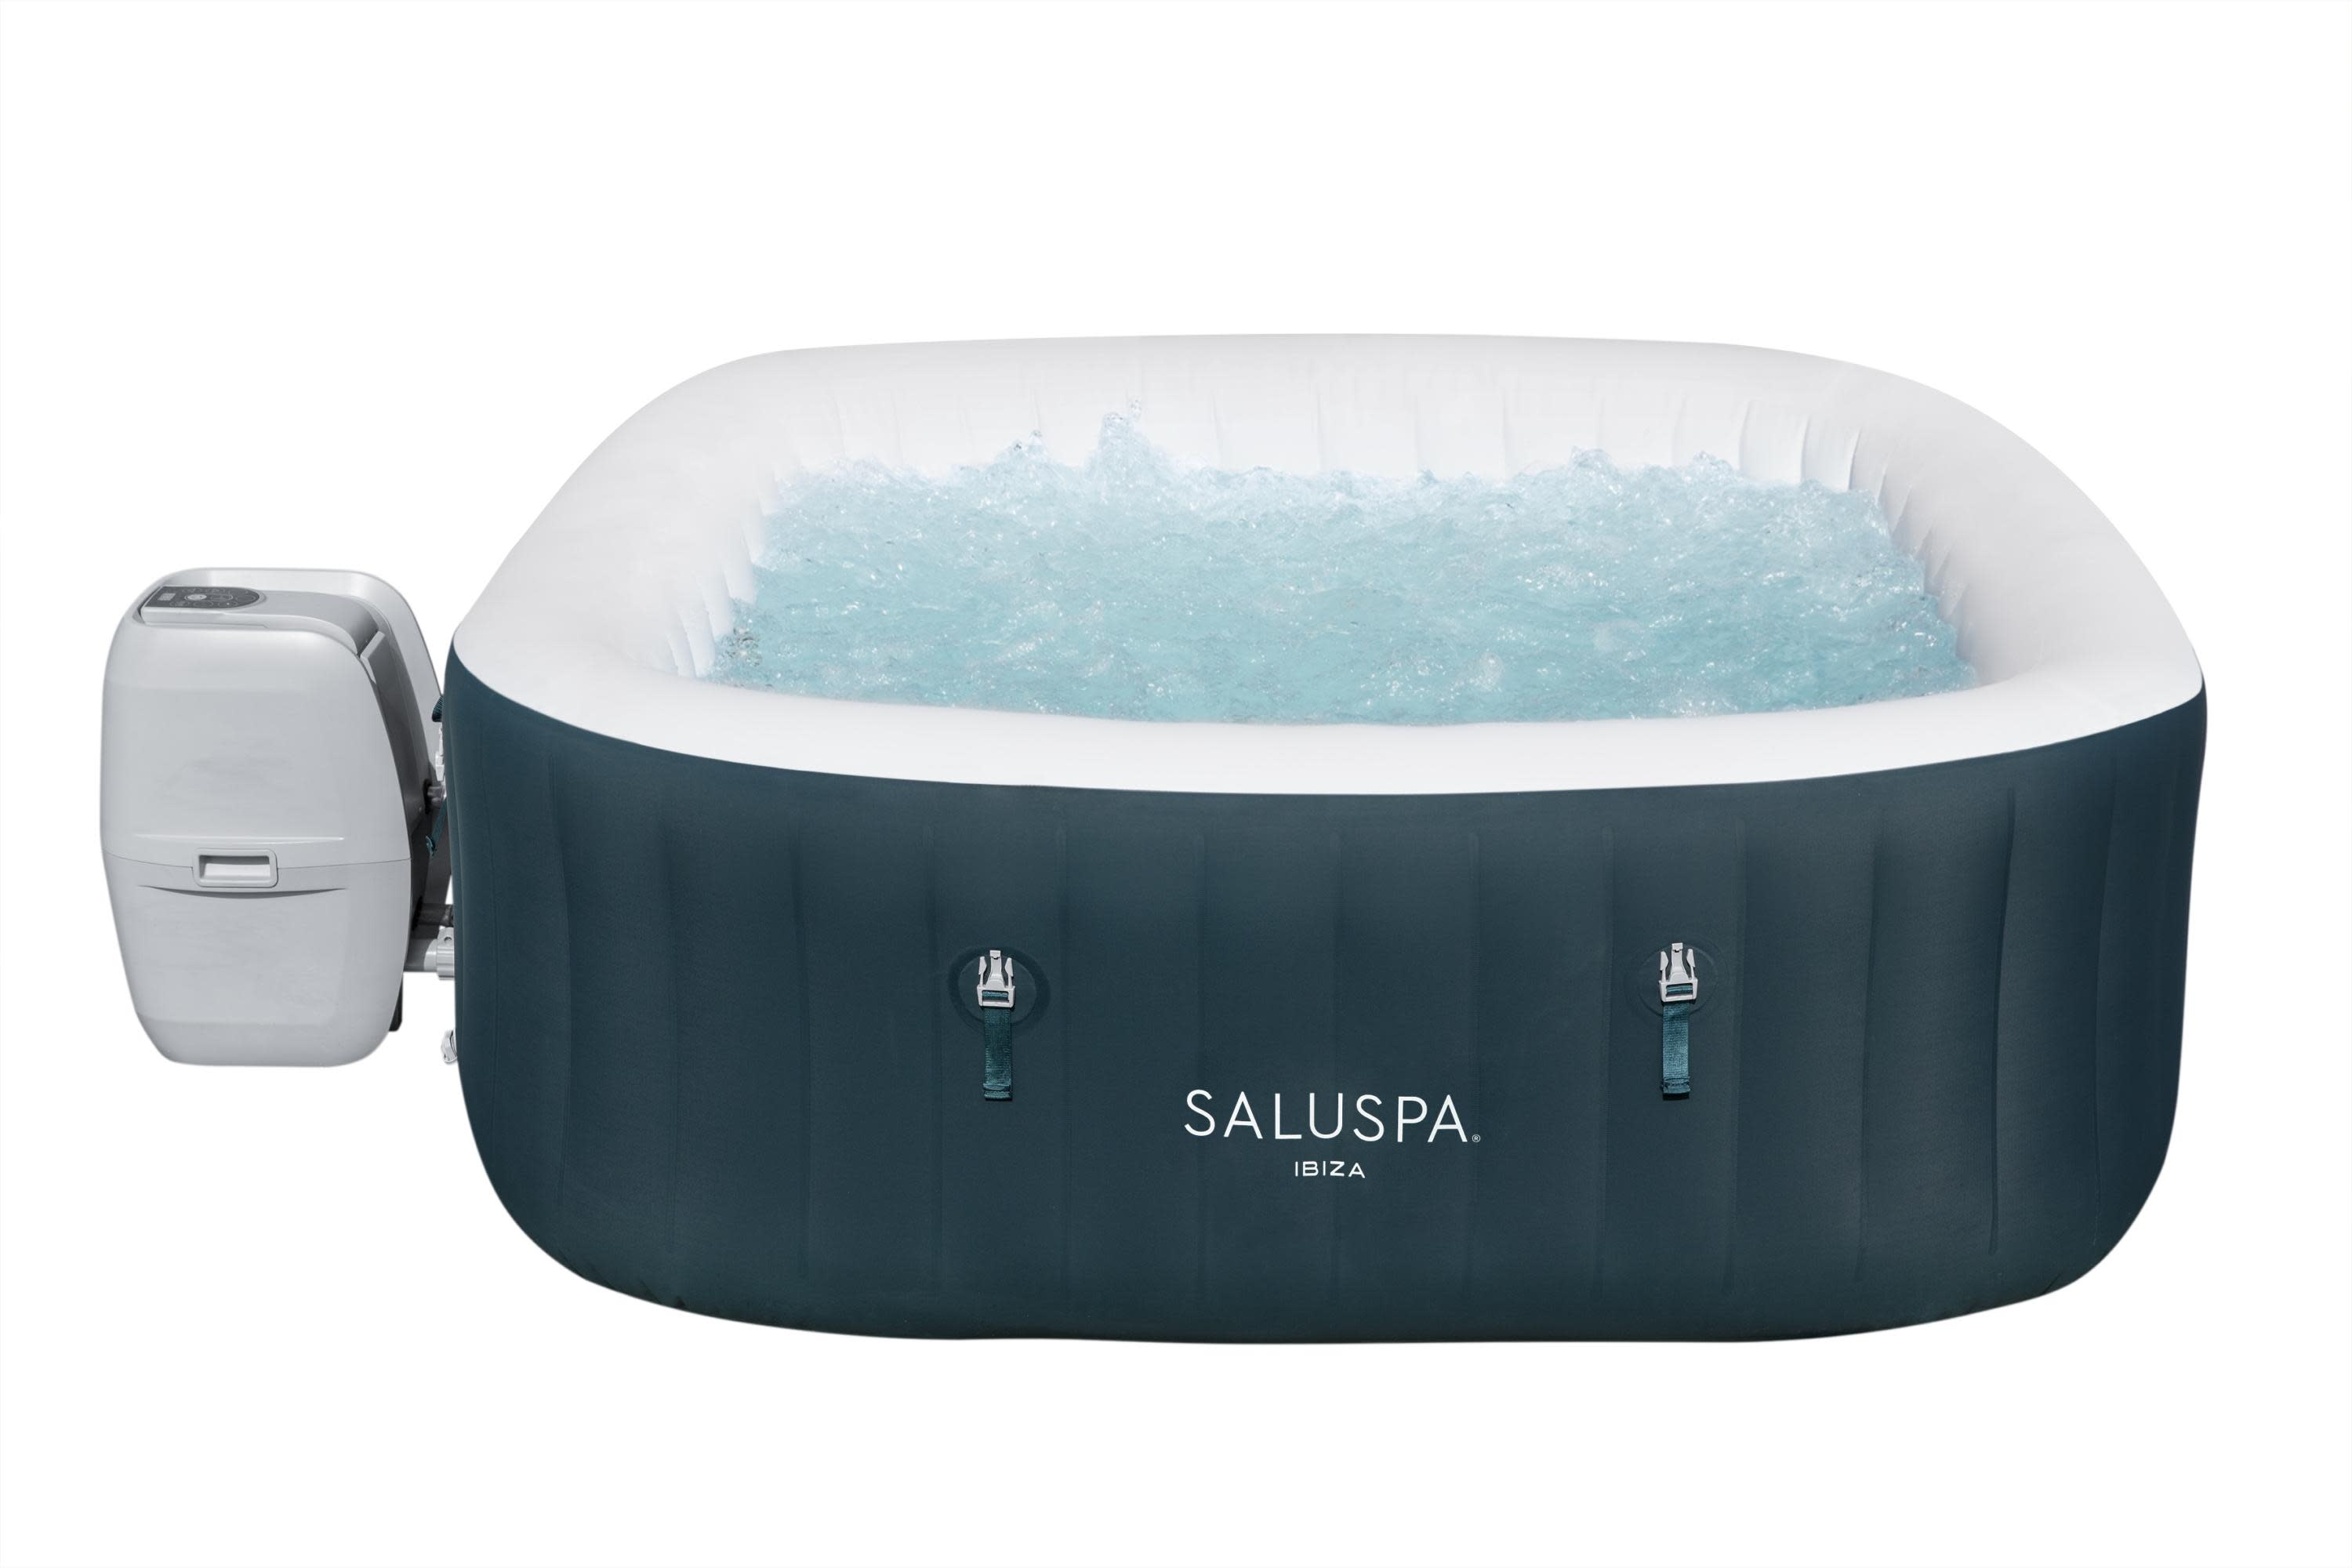 SaluSpa Ibiza AirJet Inflatable Hot Tub Spa 4-6 Person, Maximum Temperature of 104˚F - image 1 of 9